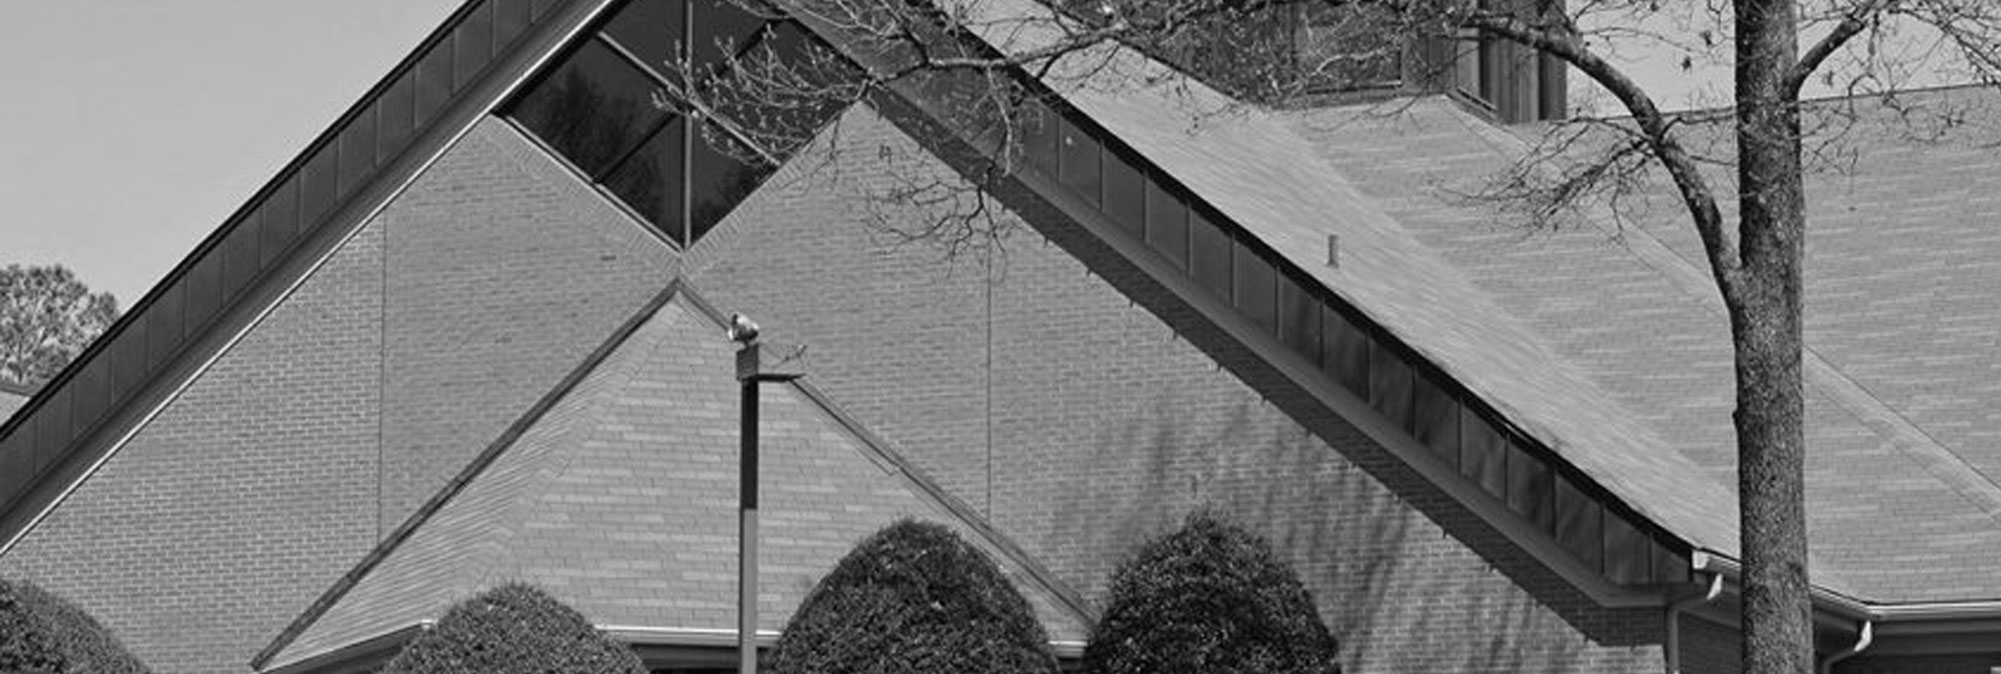 Riveroaks Reformed Presbyterian Church